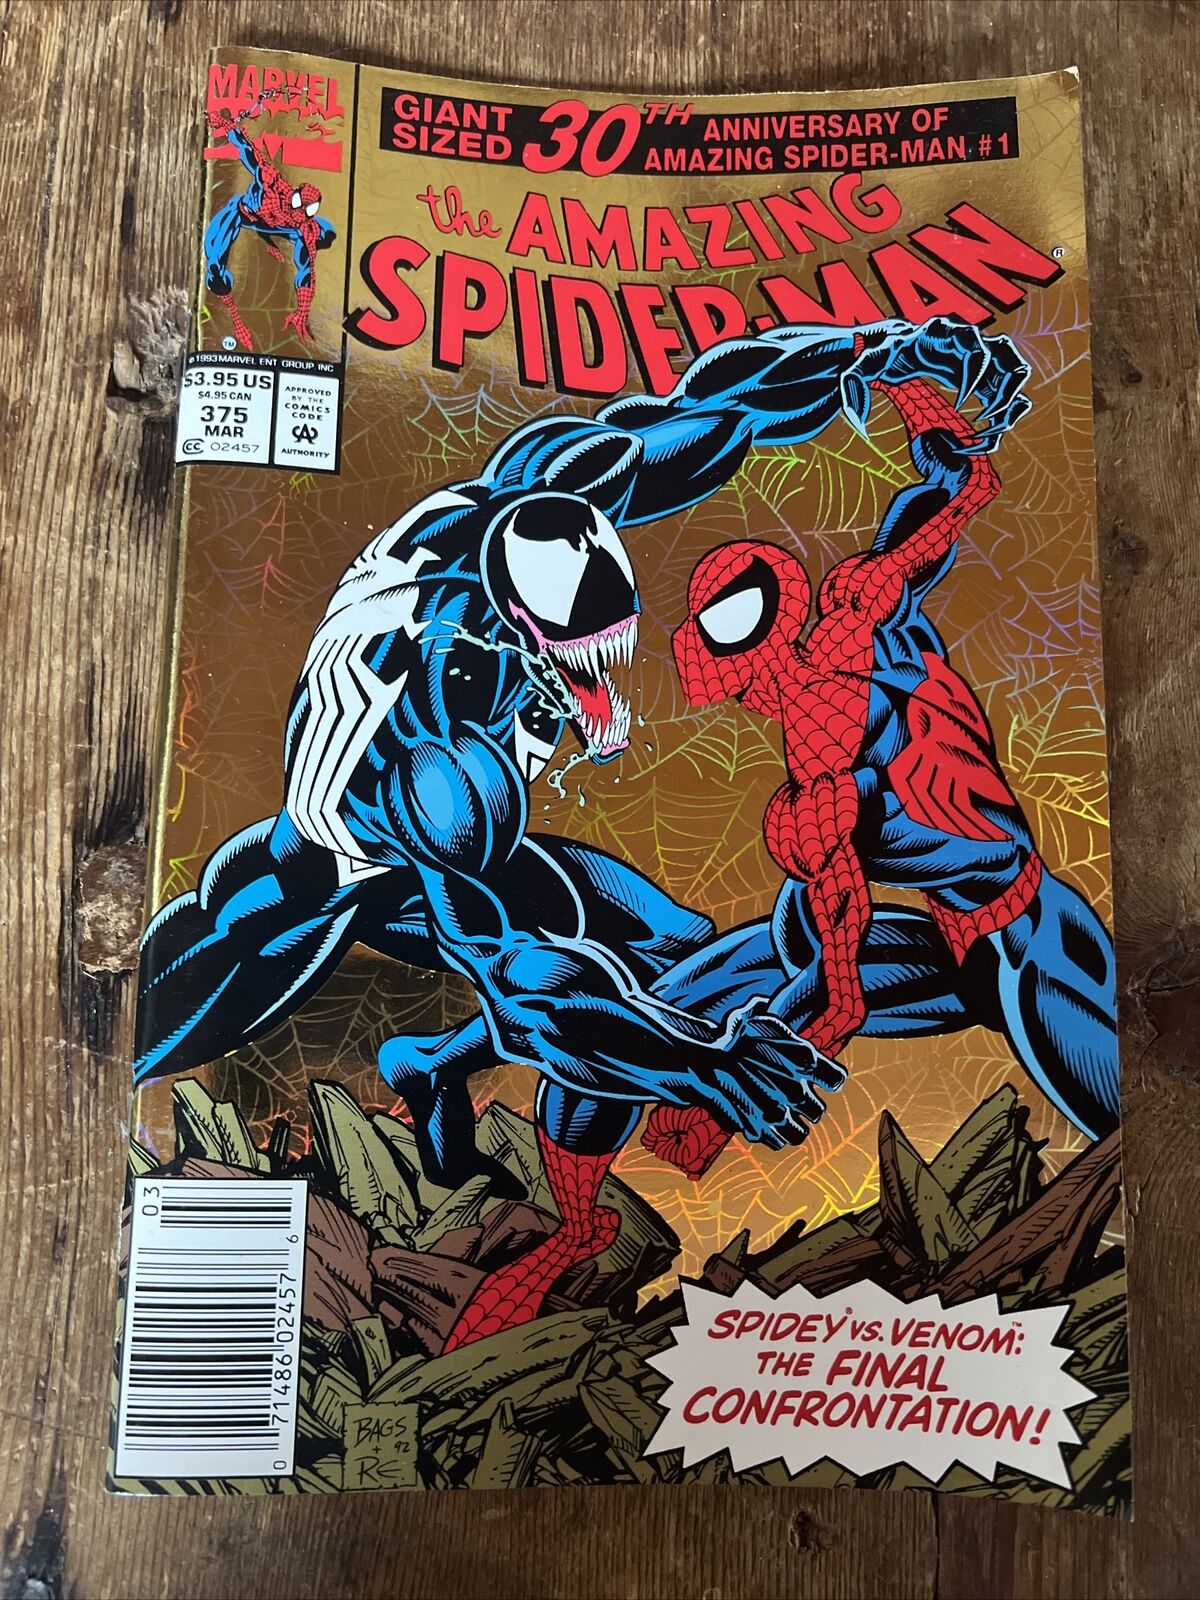 THE AMAZING SPIDER-MAN. SPIDEY VS. VENOM: THE FINAL CONFRONTATION #375